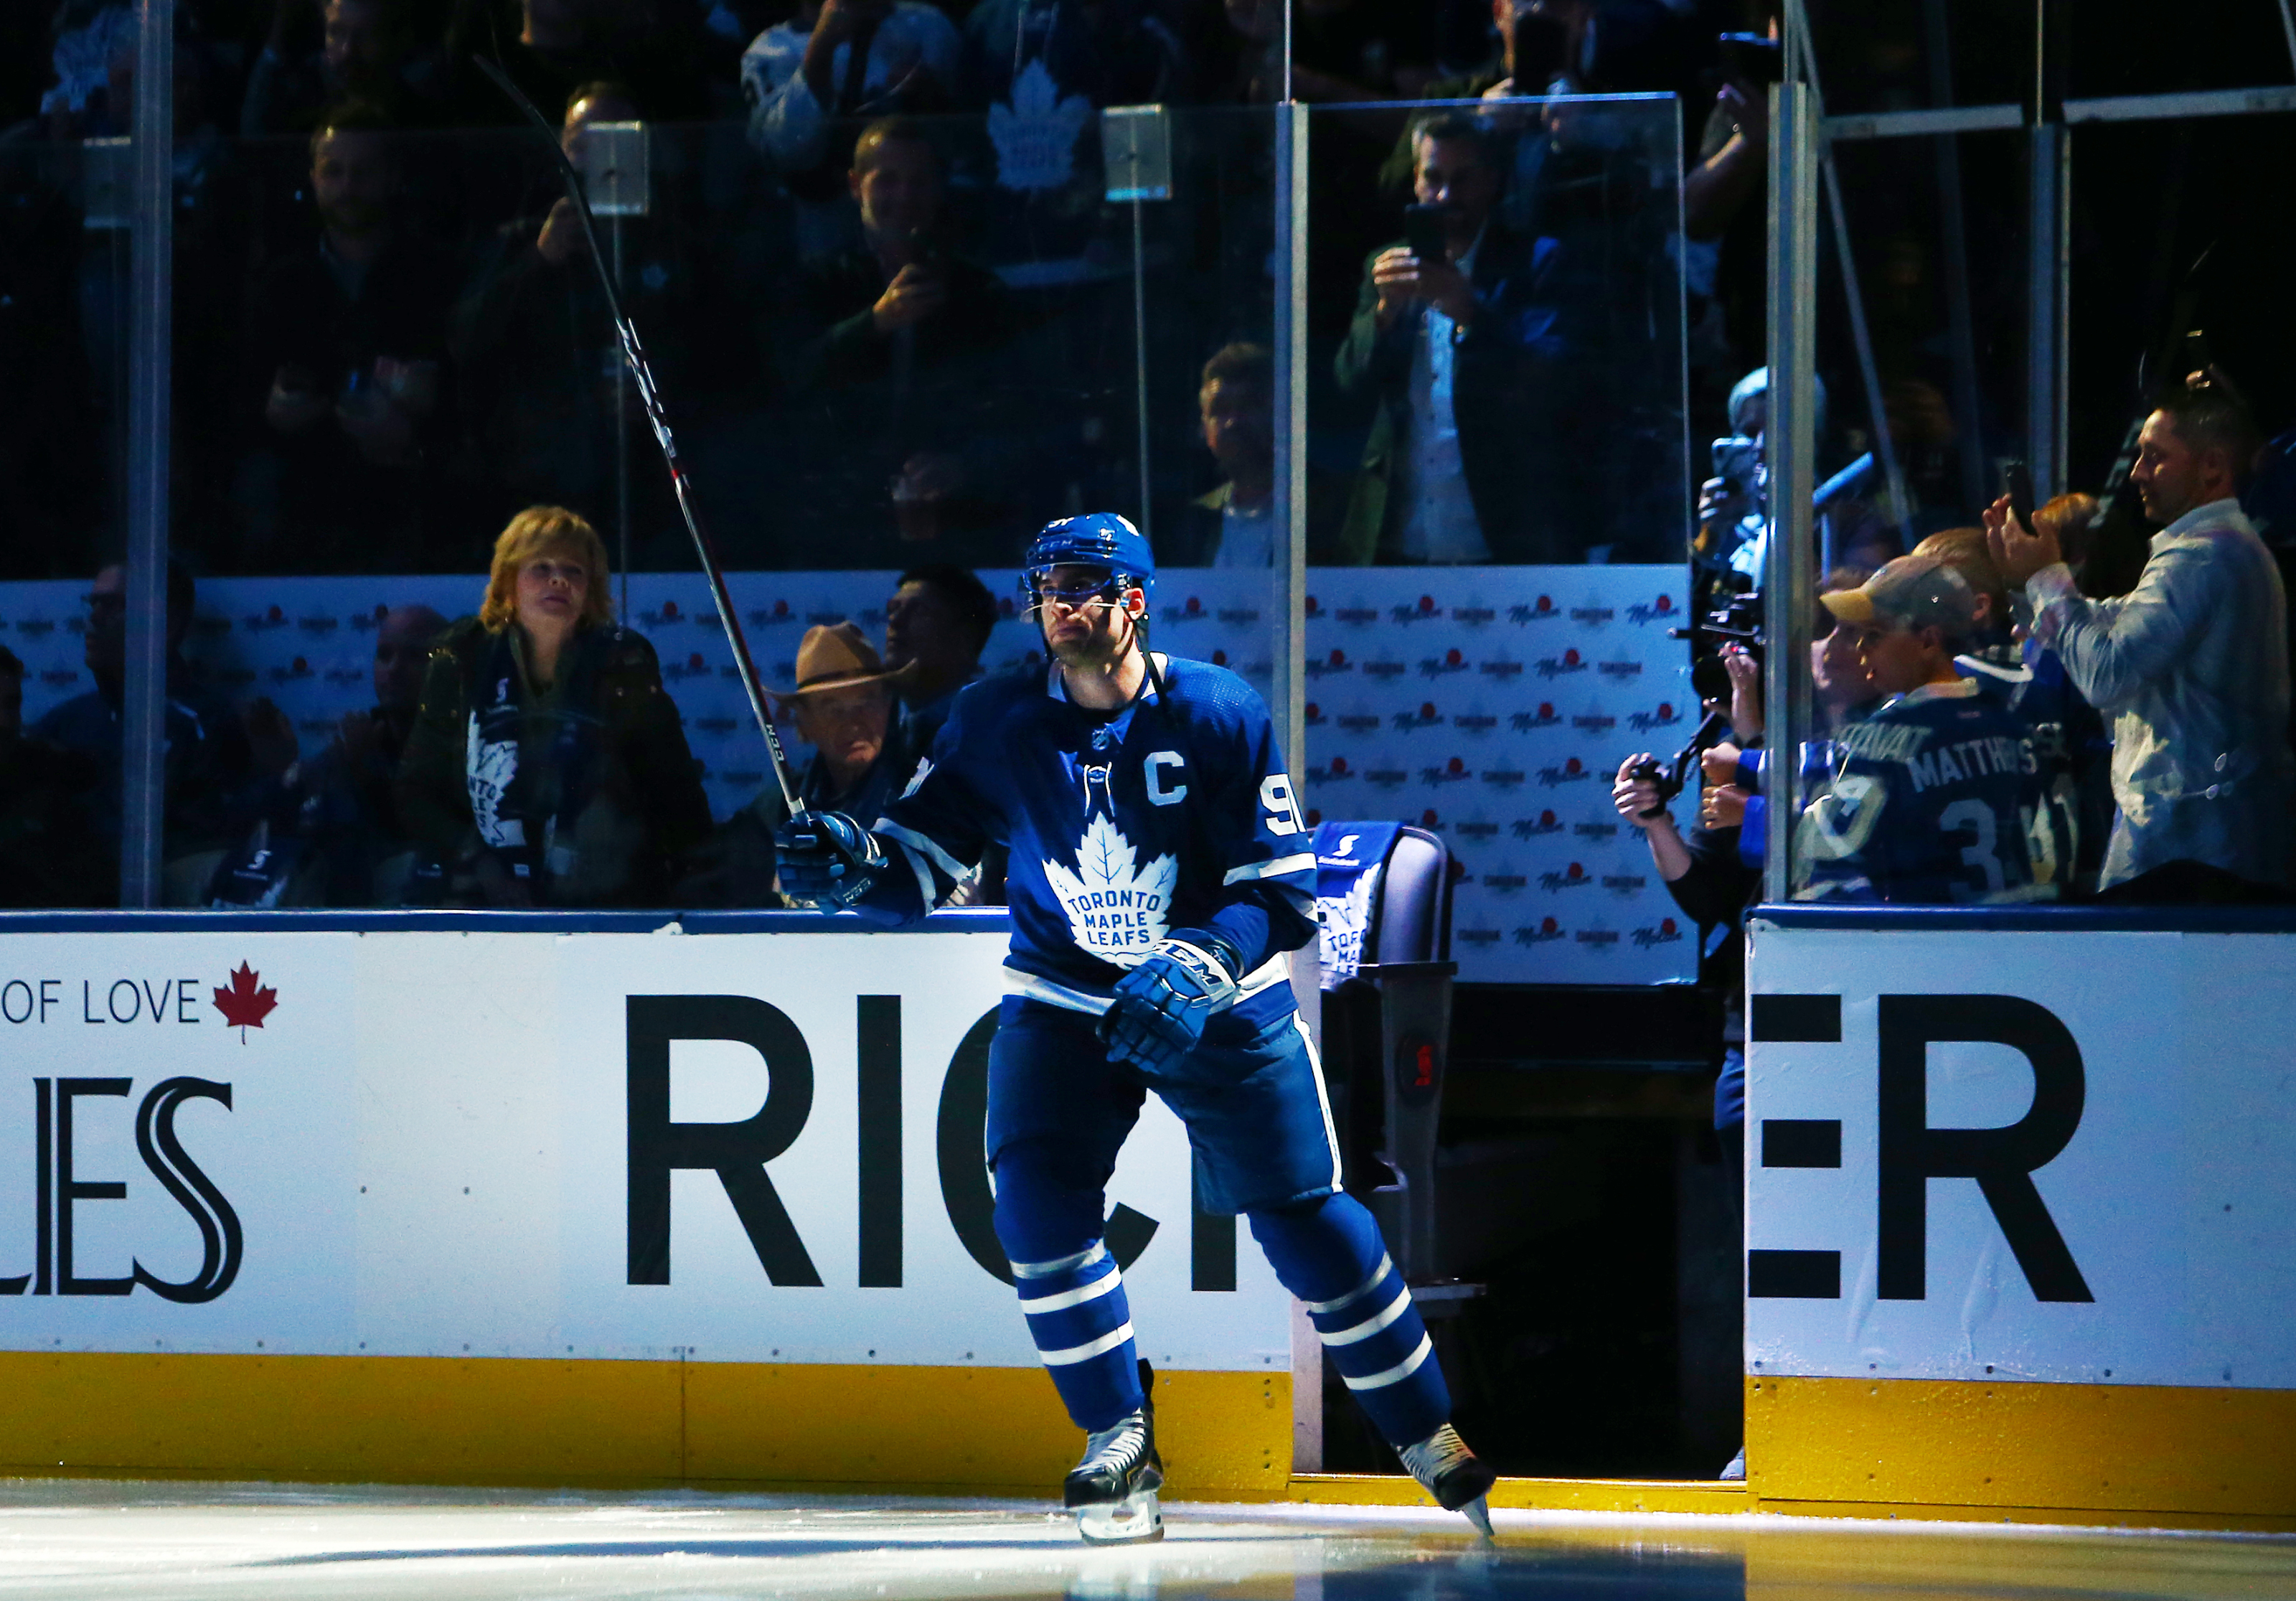 Leafs captain John Tavares not ruled out for season opener